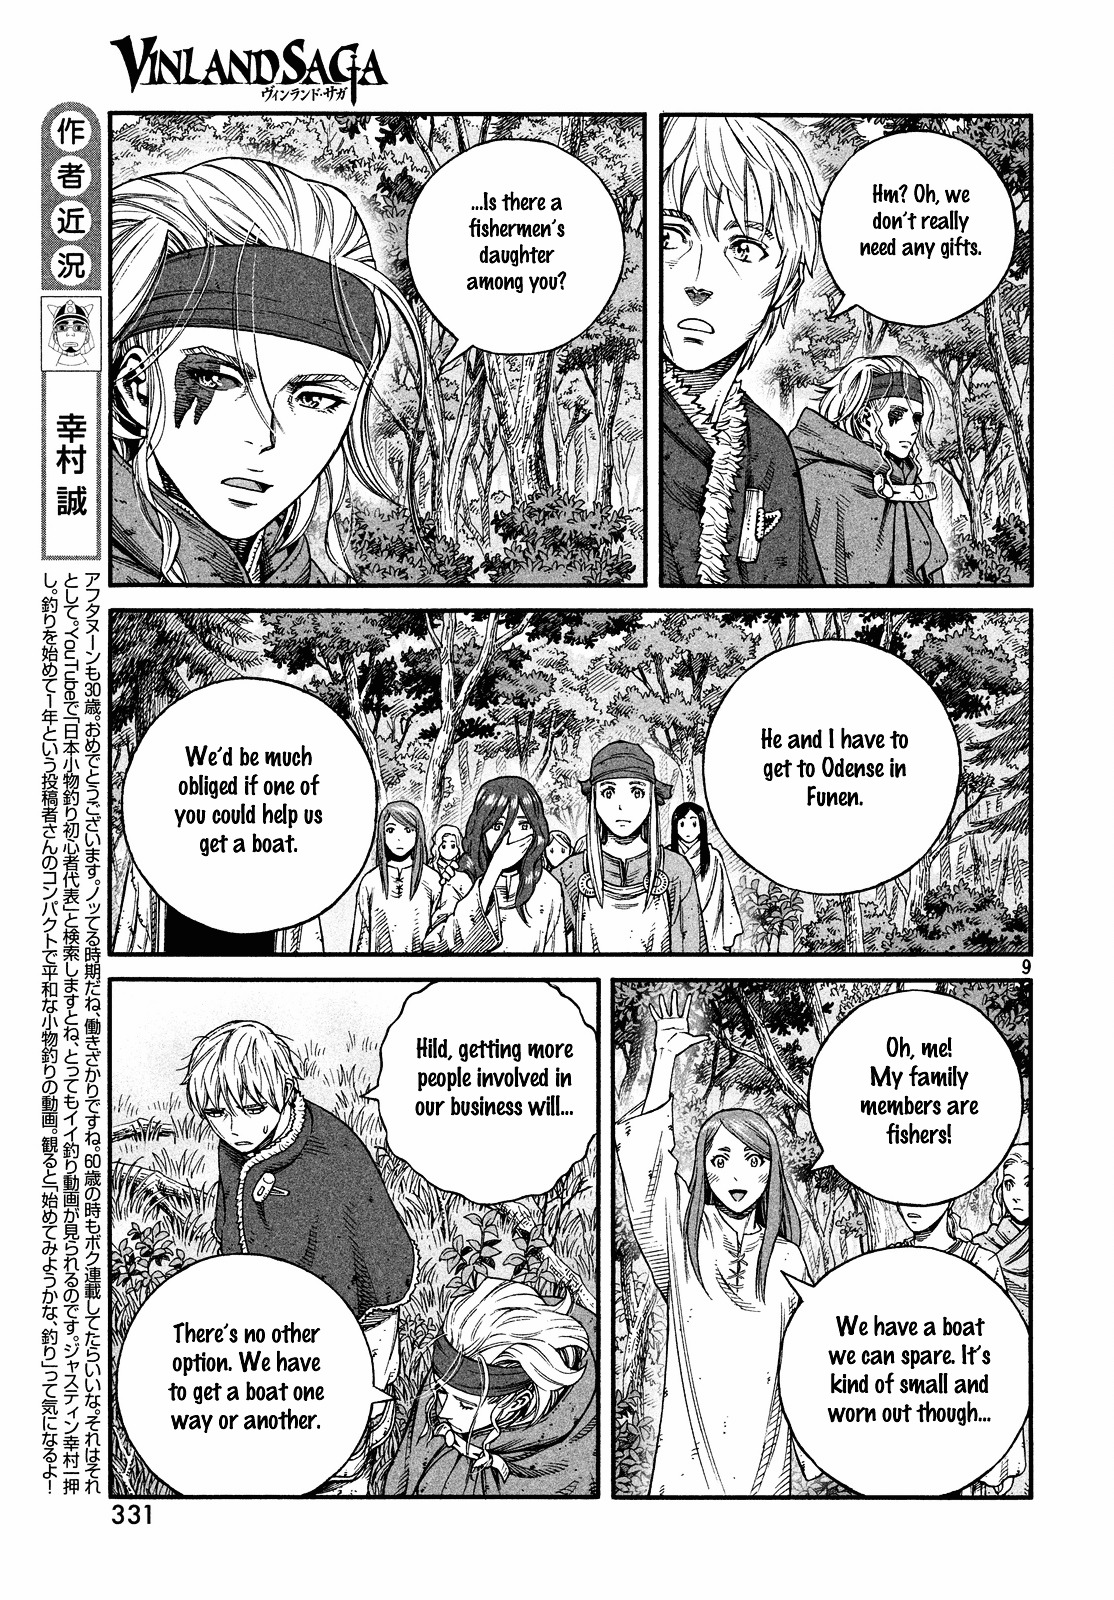 Vinland Saga Manga Manga Chapter - 134 - image 10